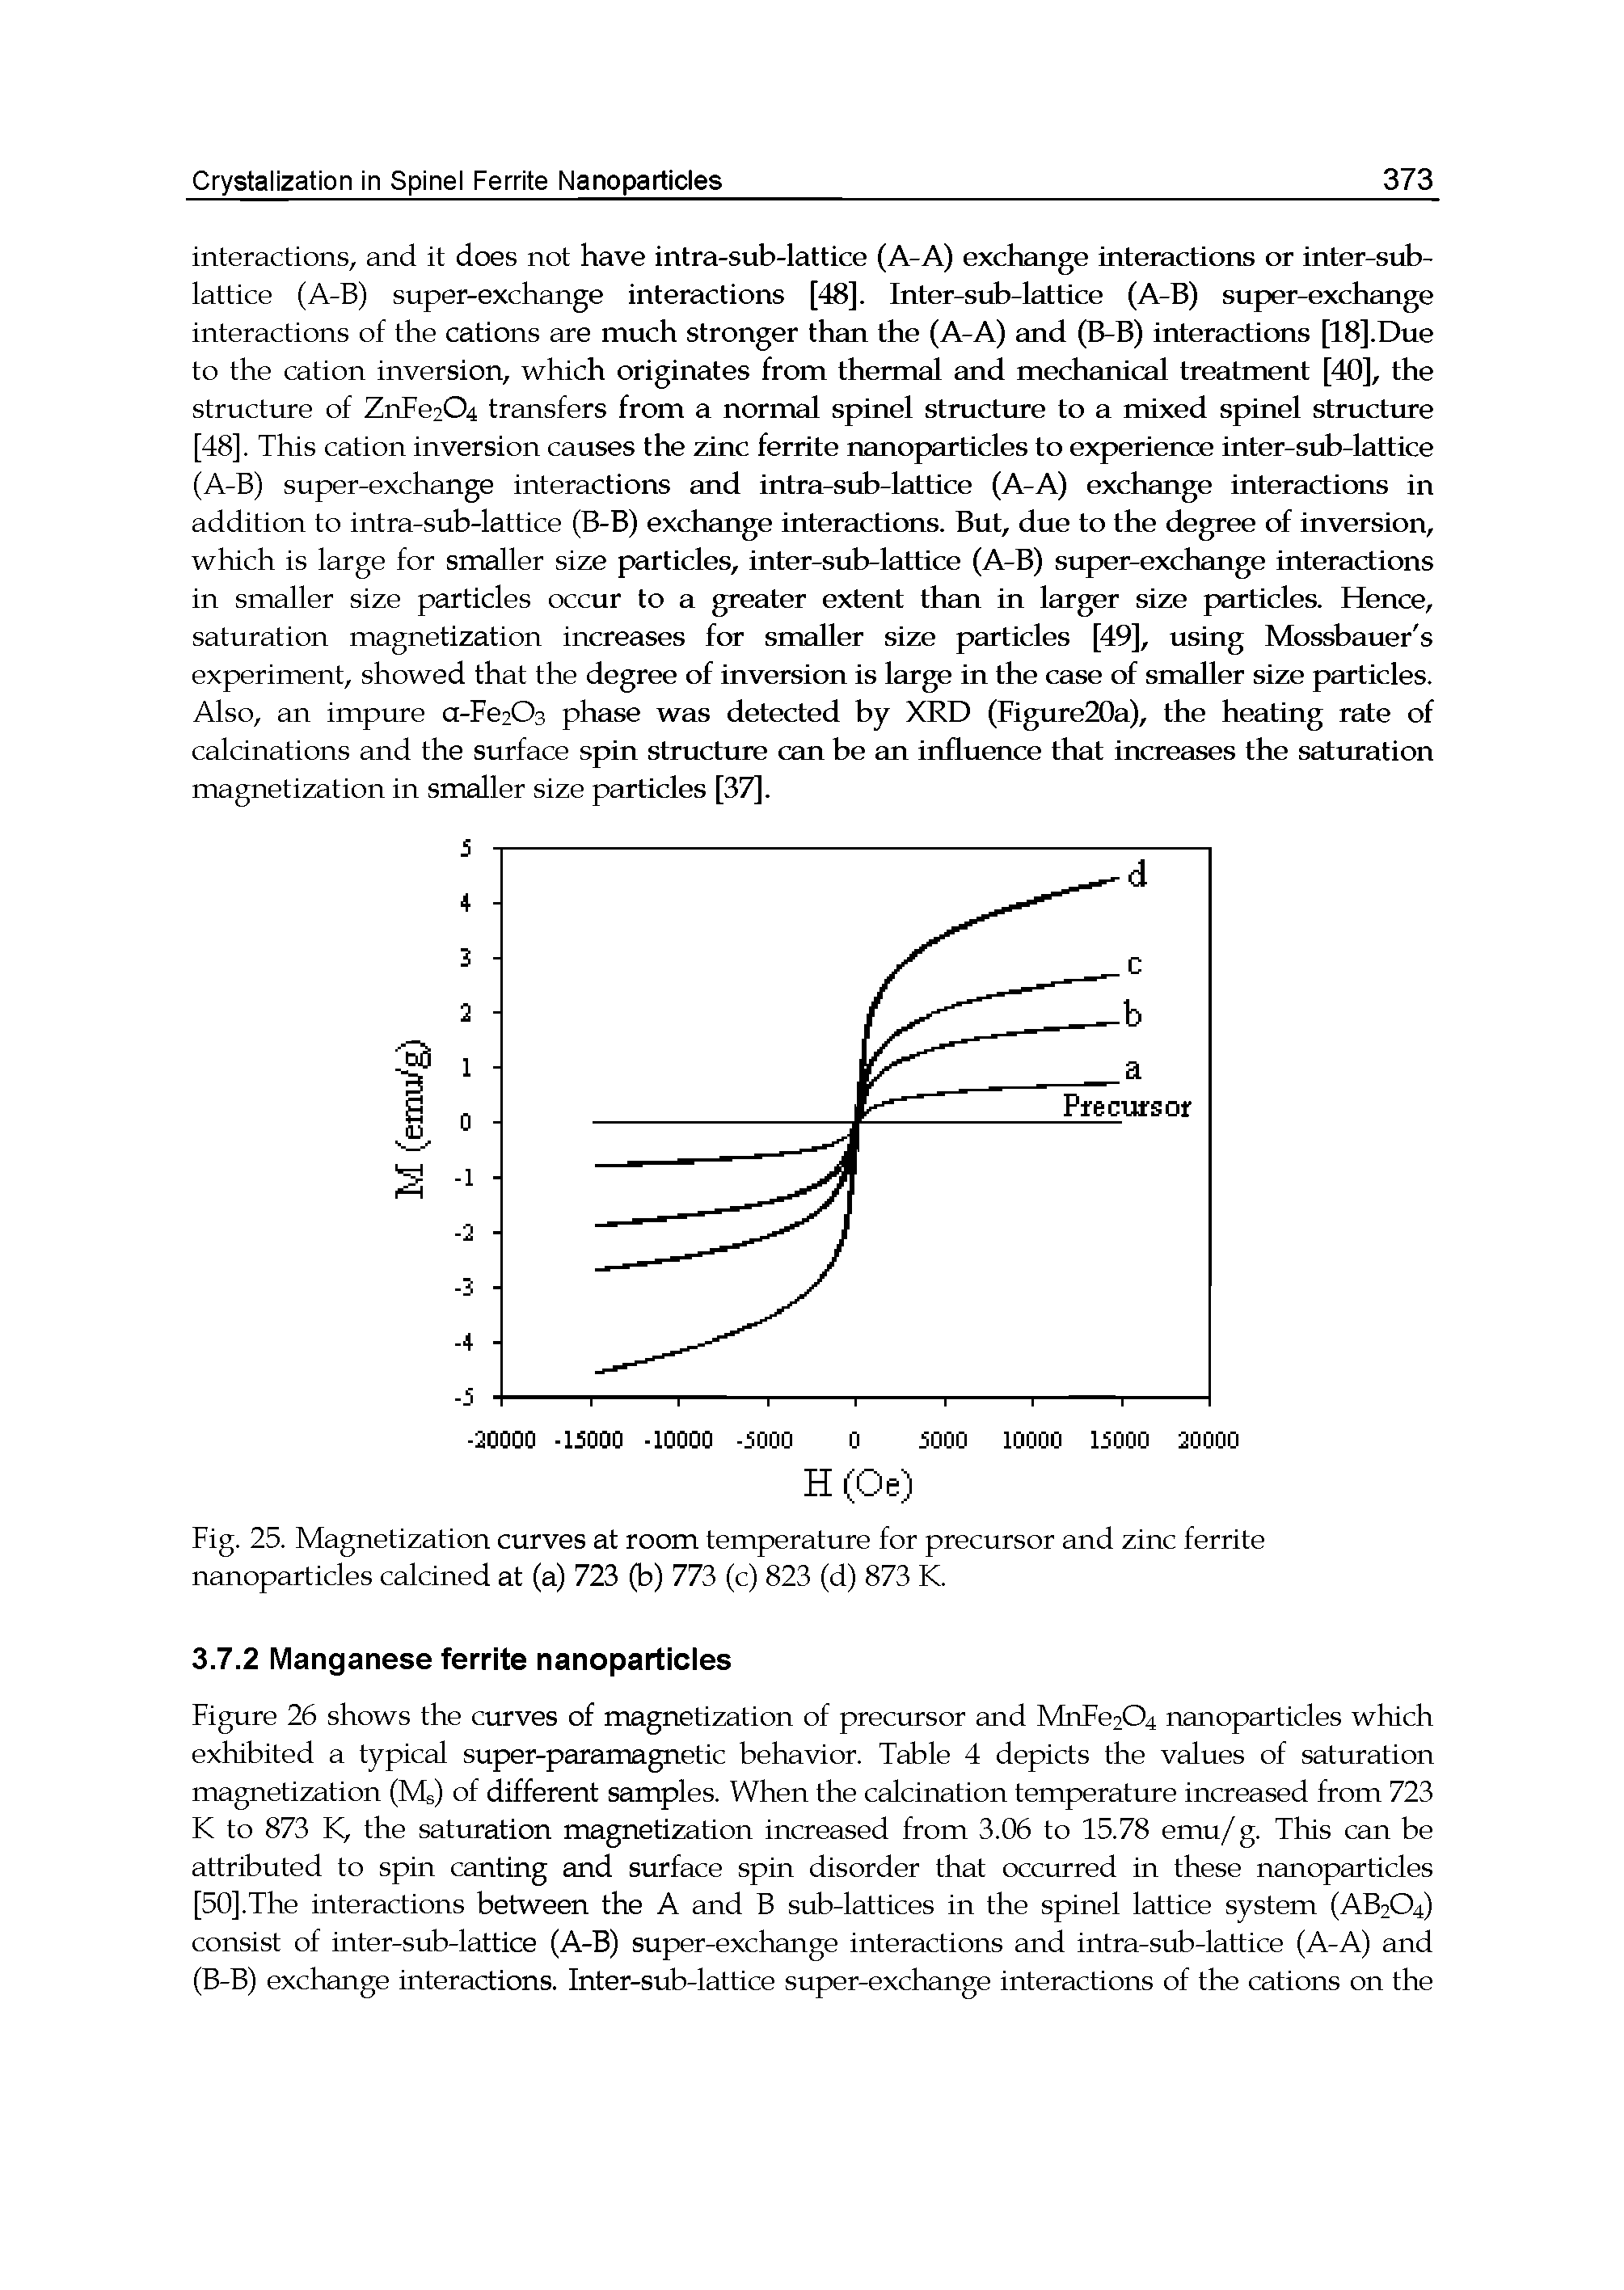 Fig. 25. Magnetization curves at room temperature for precursor and zinc ferrite nanopartides caldned at (a) 723 (b) 773 (c) 823 (d) 873 K...